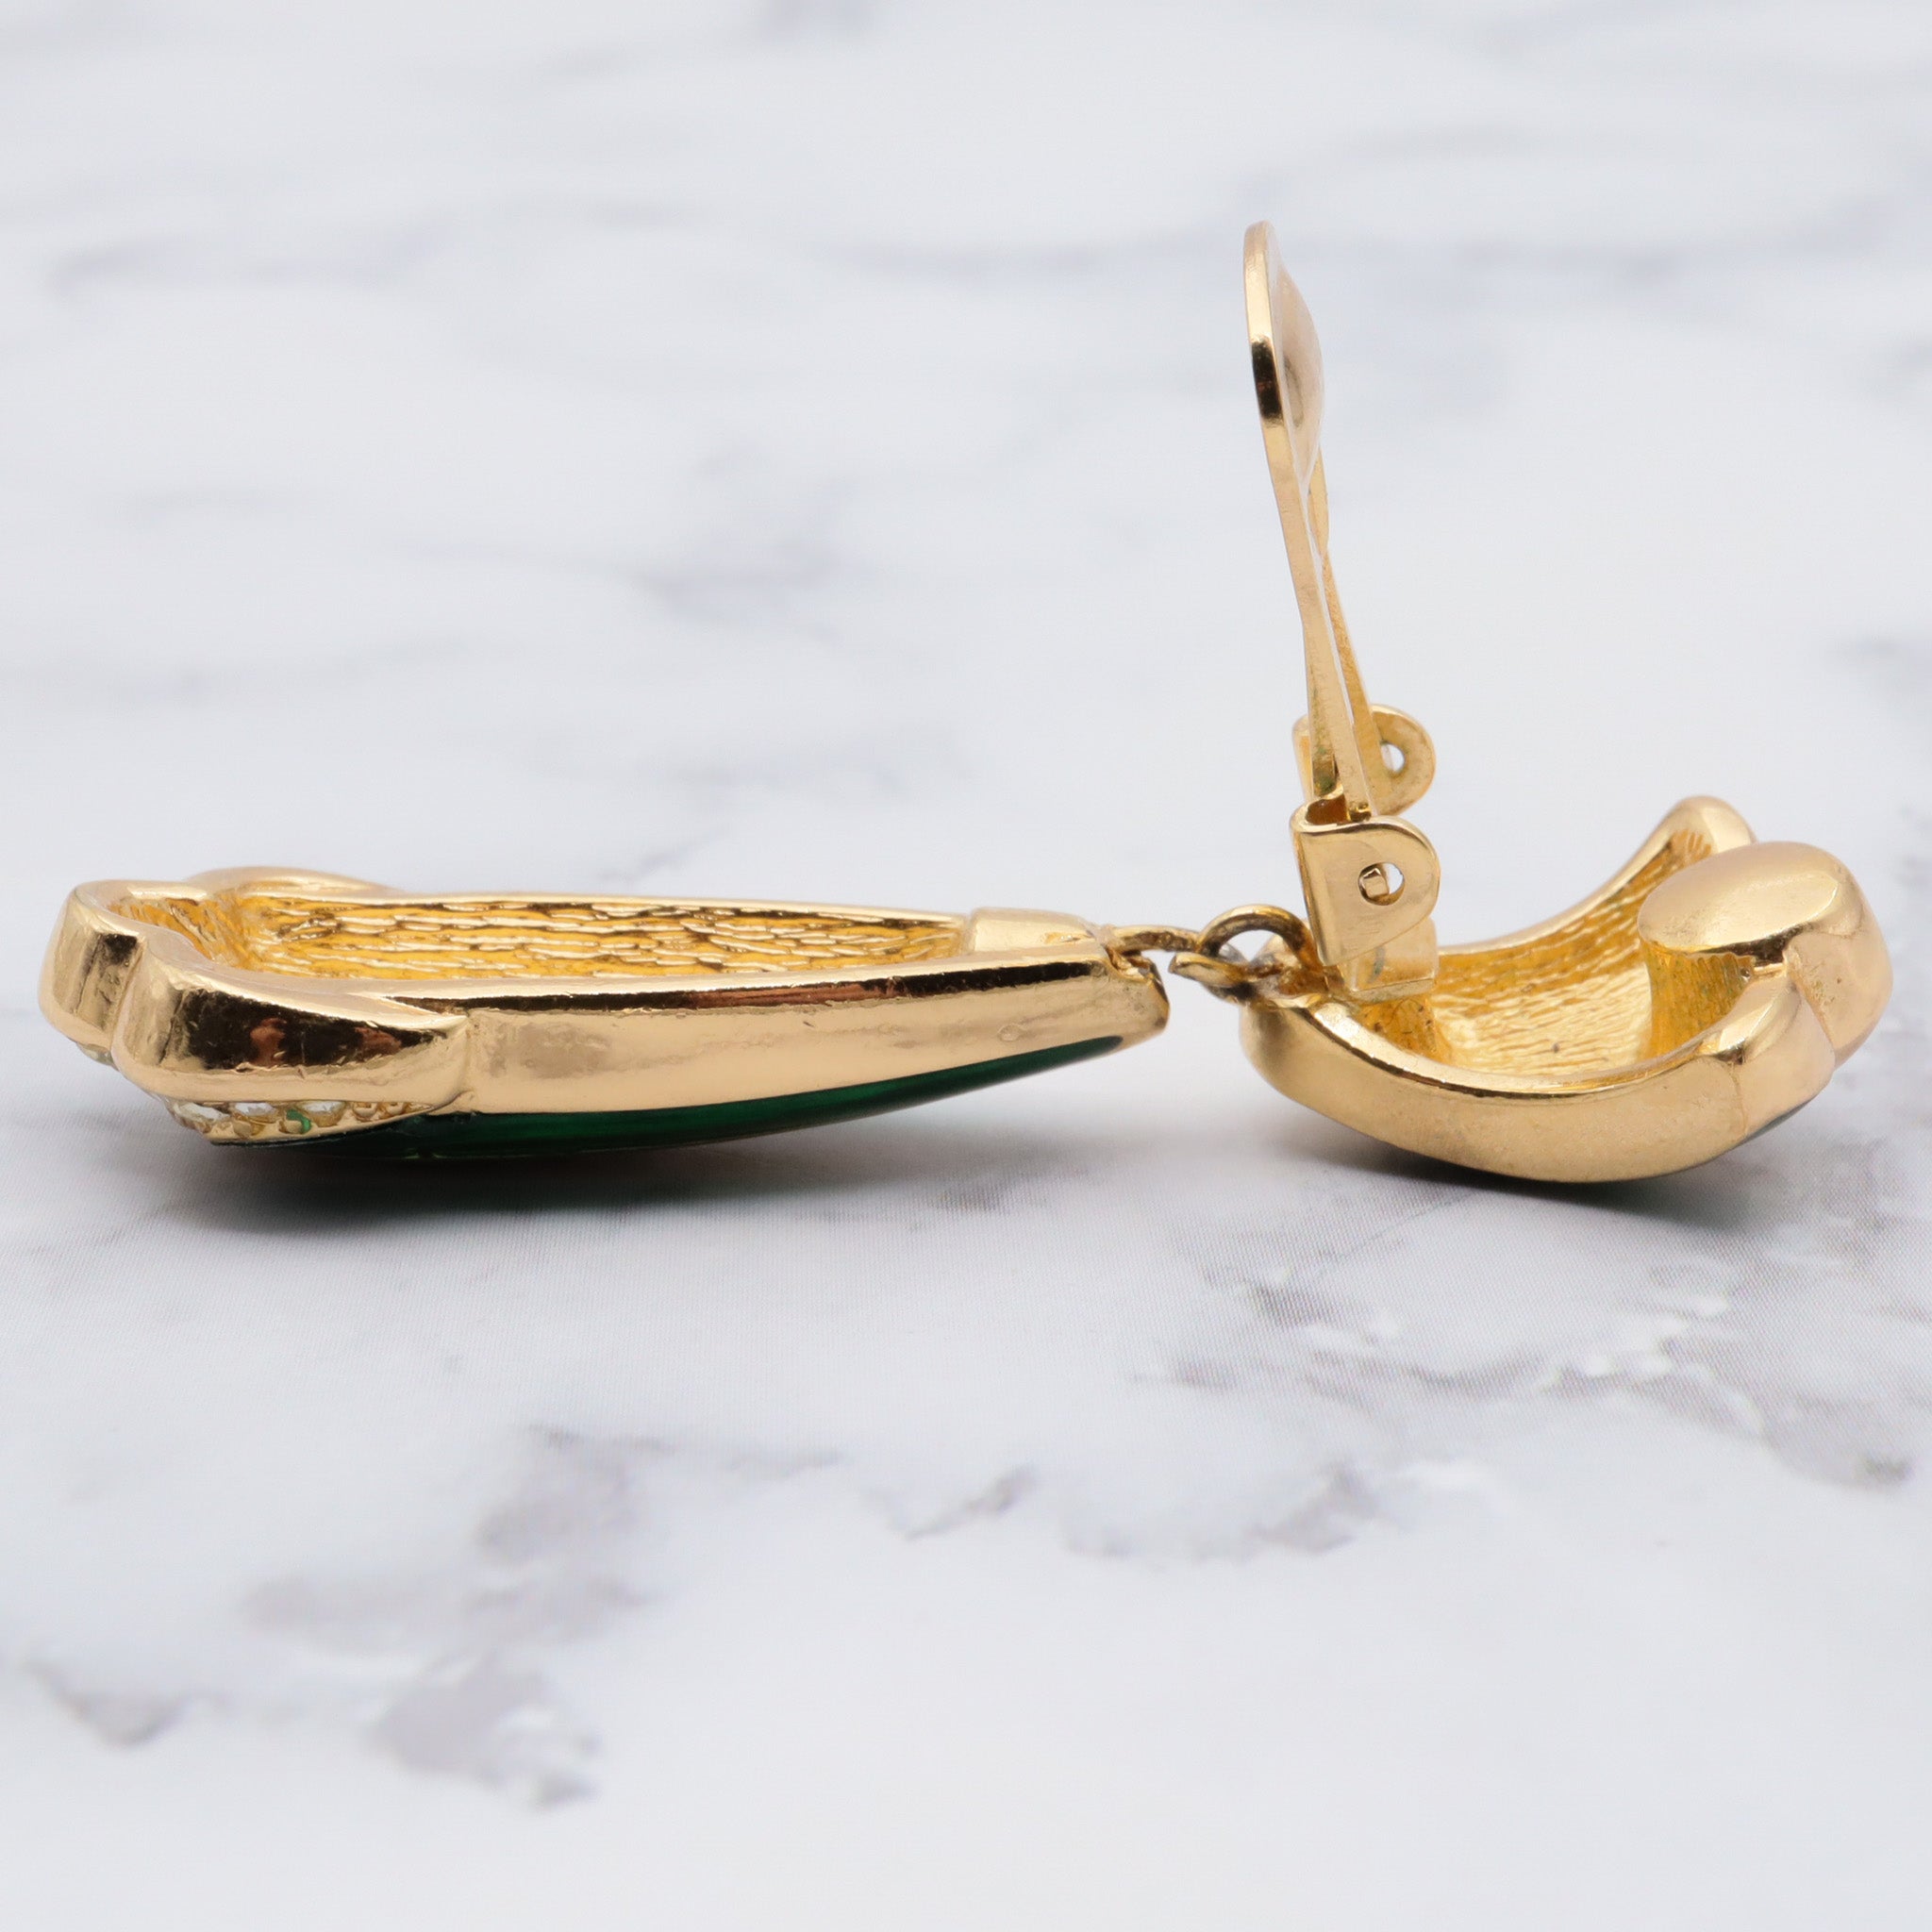 Vintage 1970s Christian Dior gold plated, enamel & rhinestone drop earrings